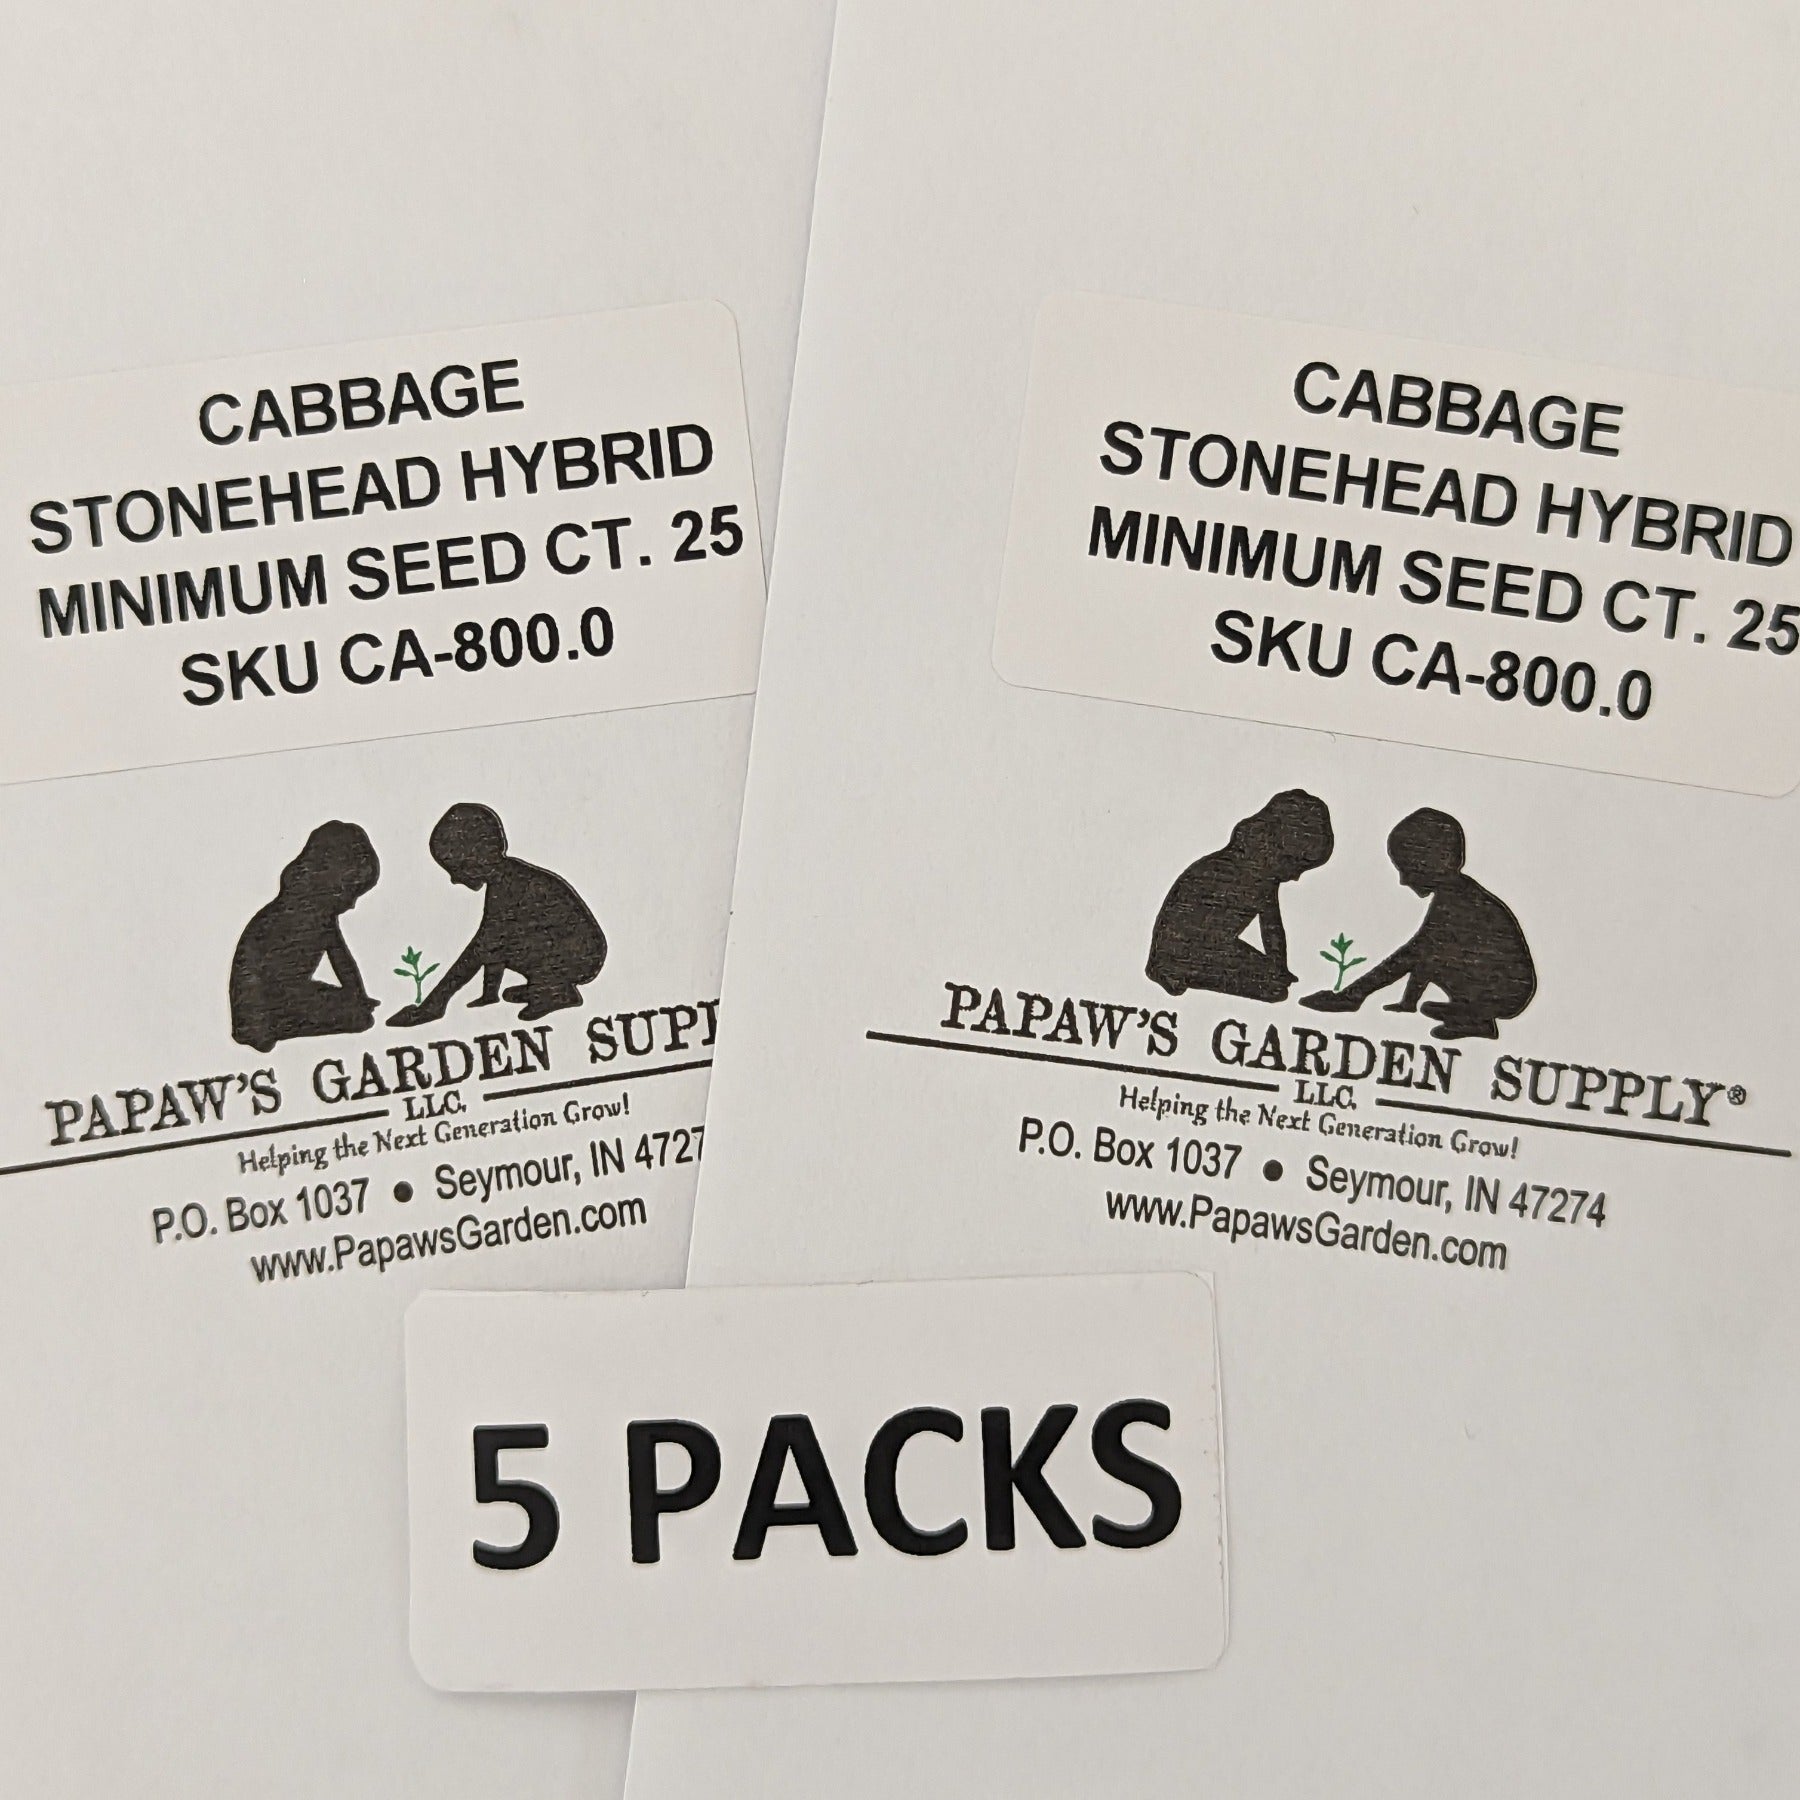 Stone Head Hybrid Cabbage Seeds